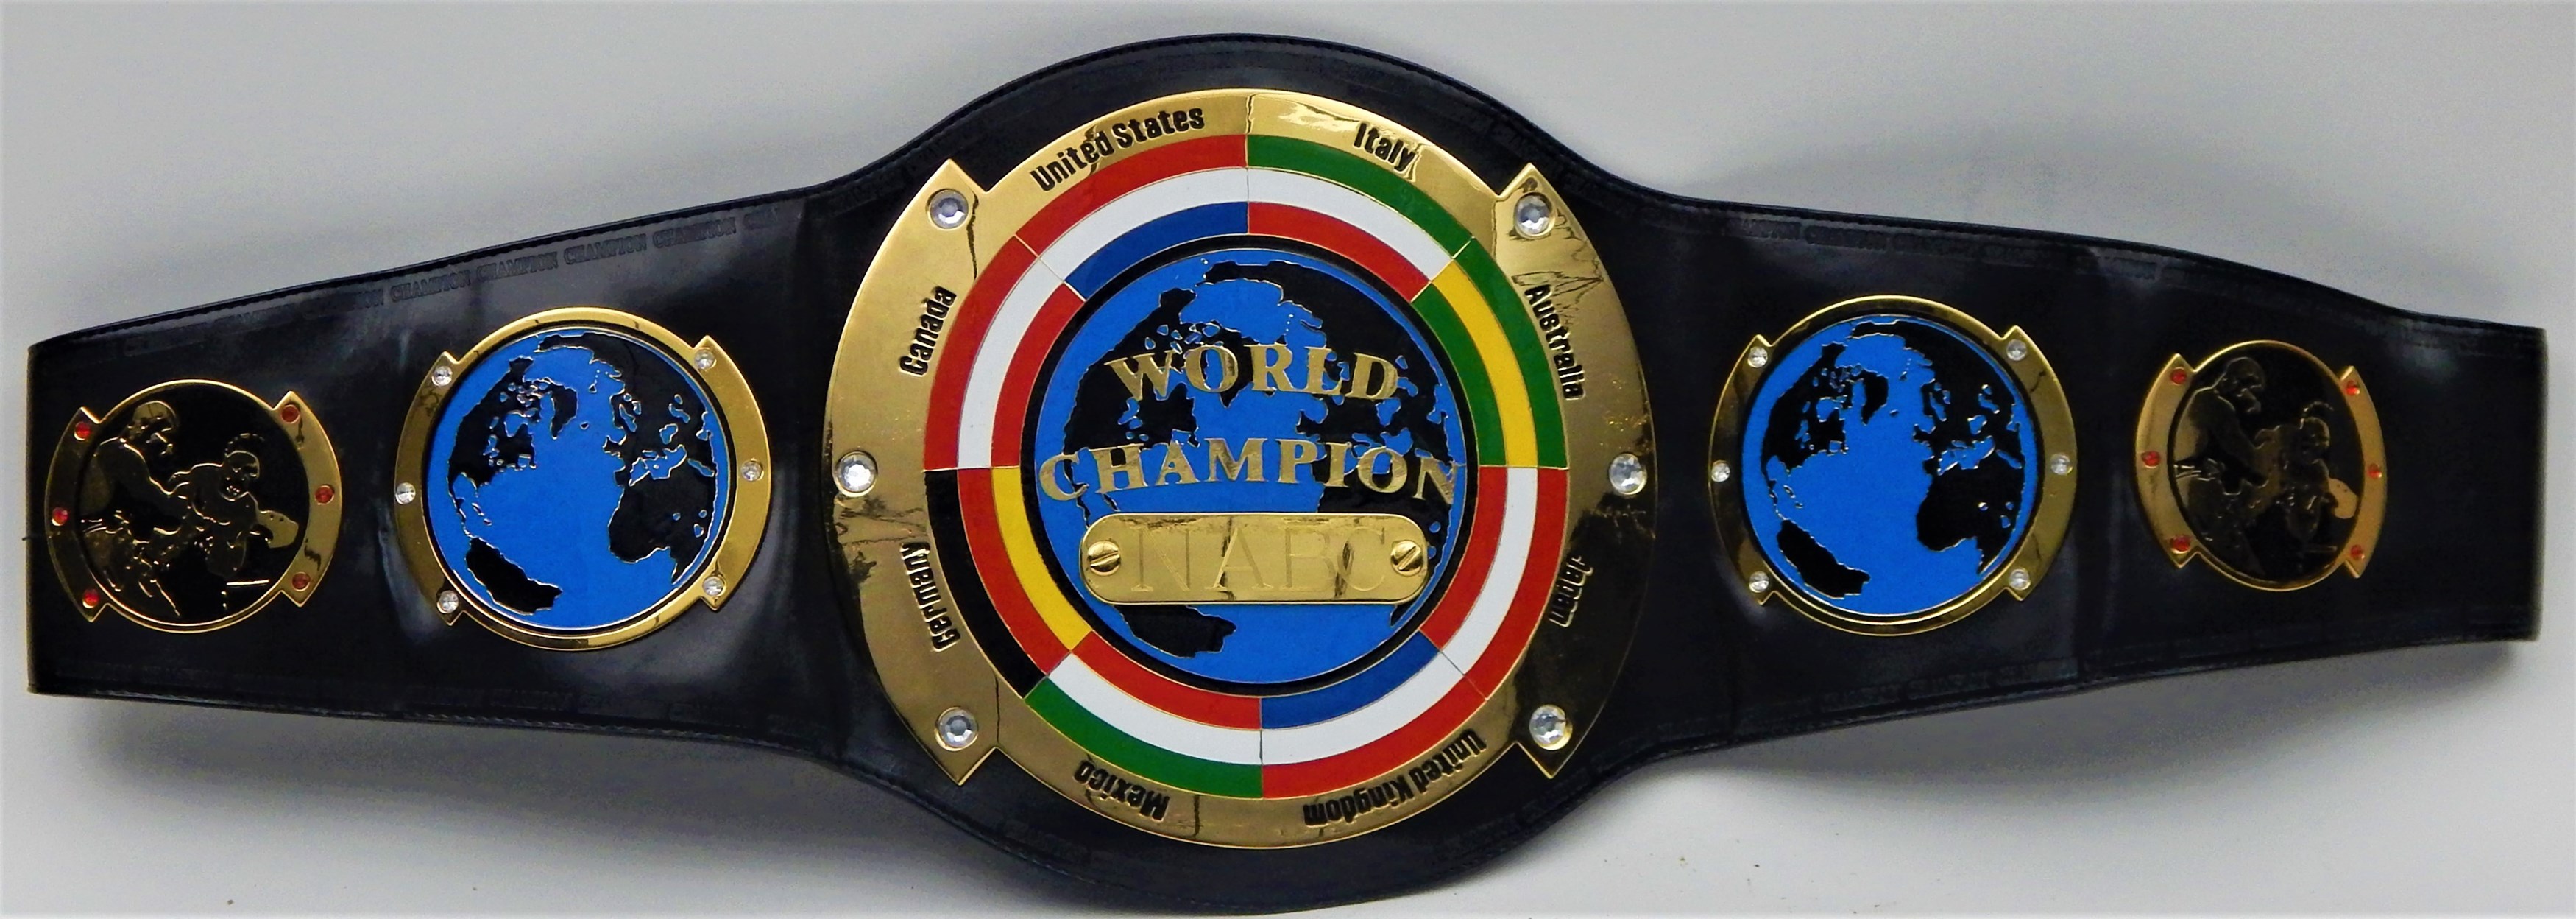 - NABC World Championship Belt